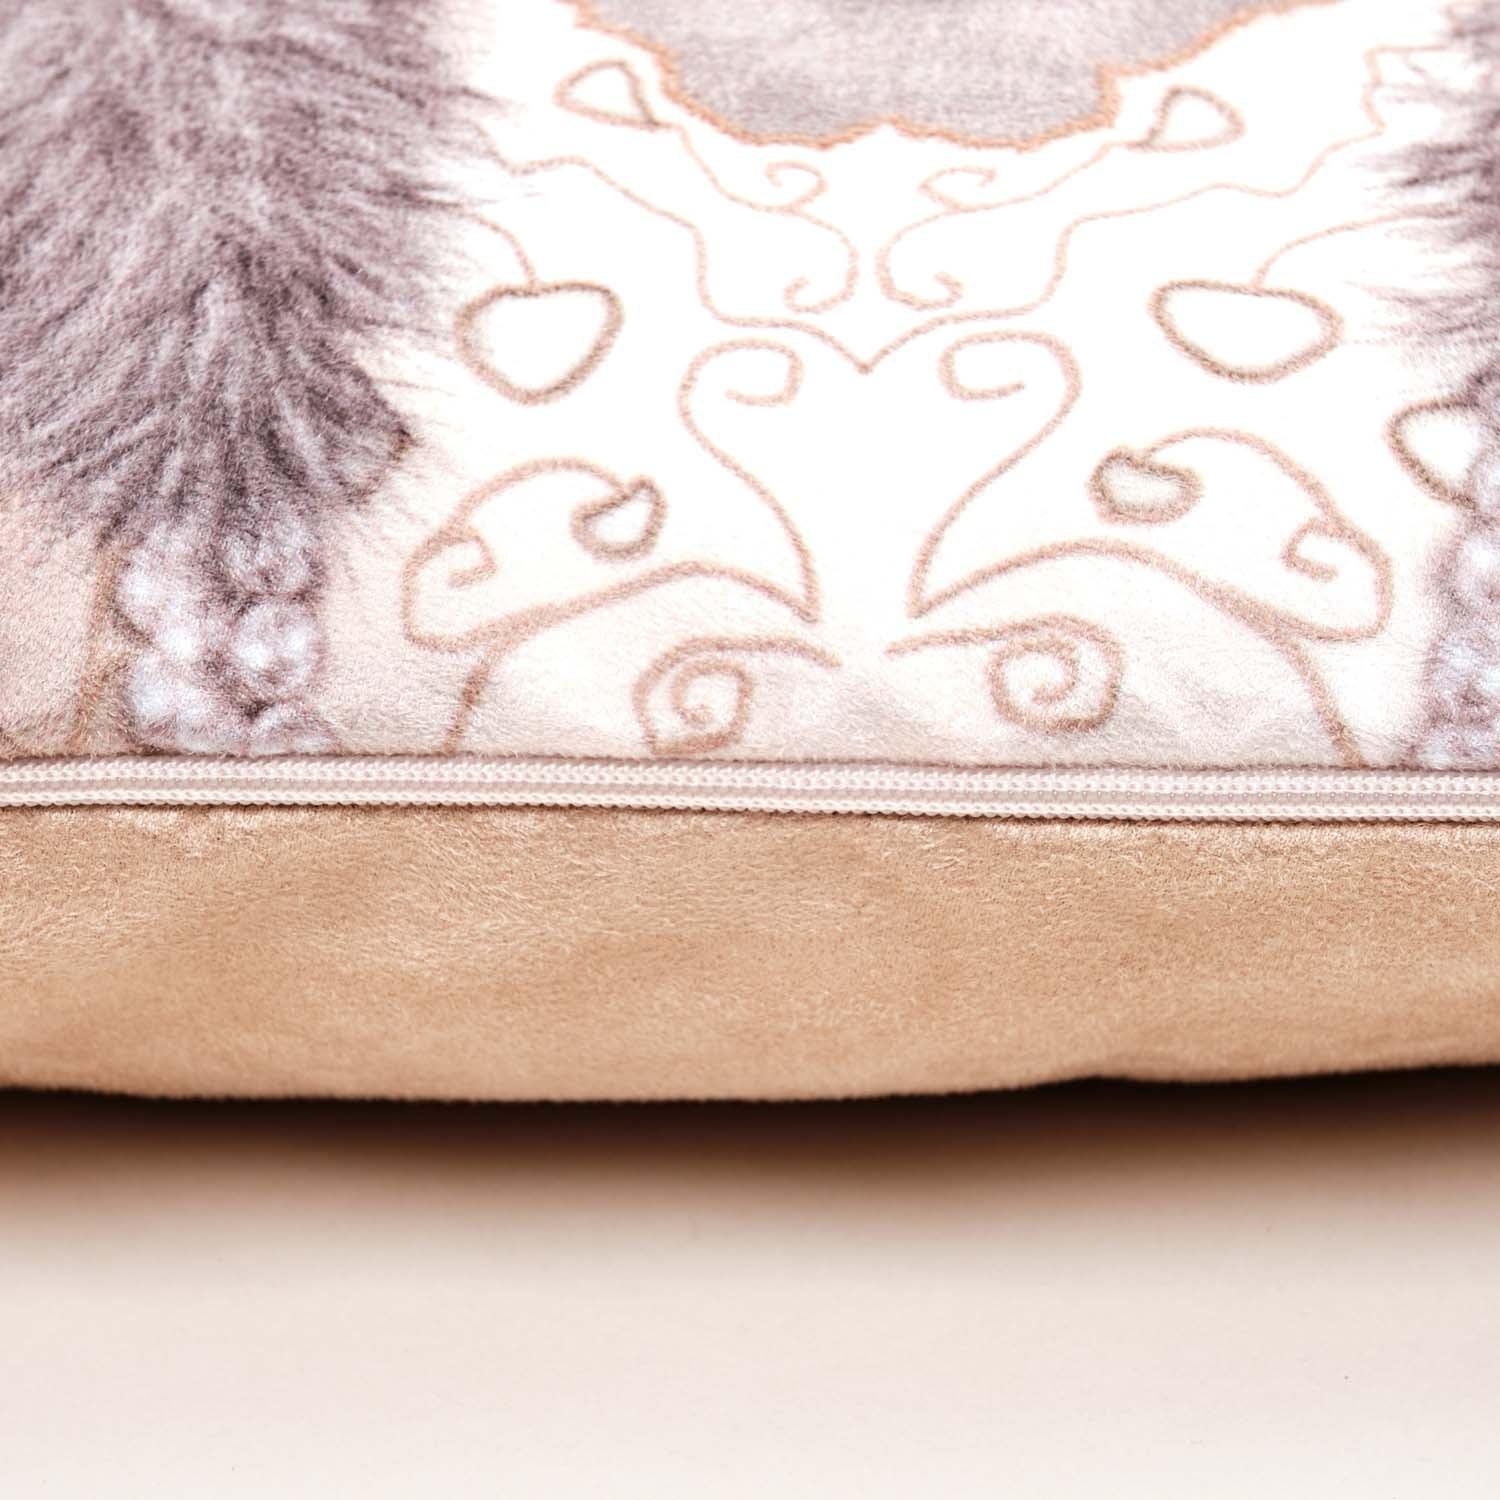 Bus - Kali Stileman Cushion - Handmade Cushions UK - WeLoveCushions